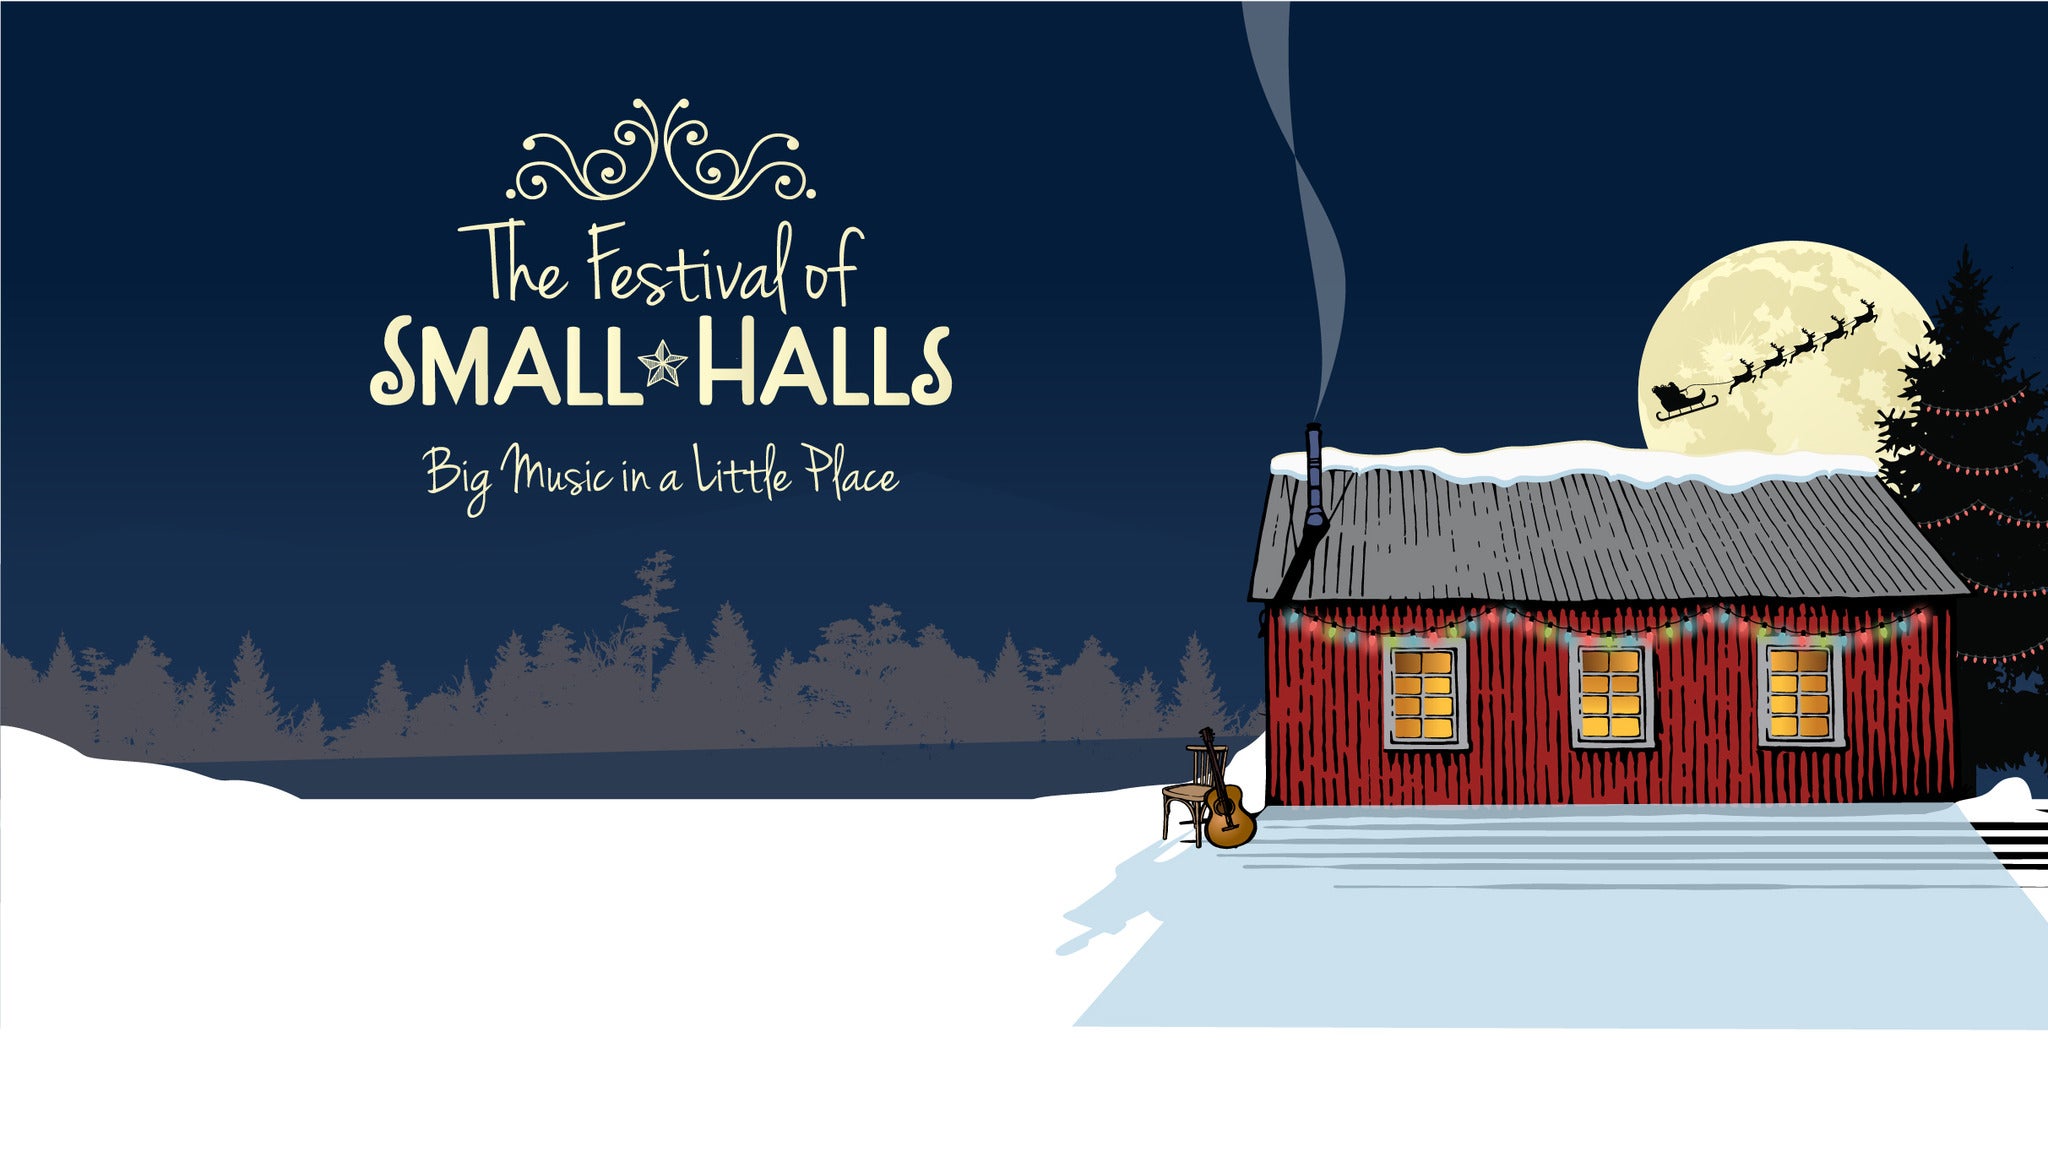 The Festival of Small Halls presale information on freepresalepasswords.com